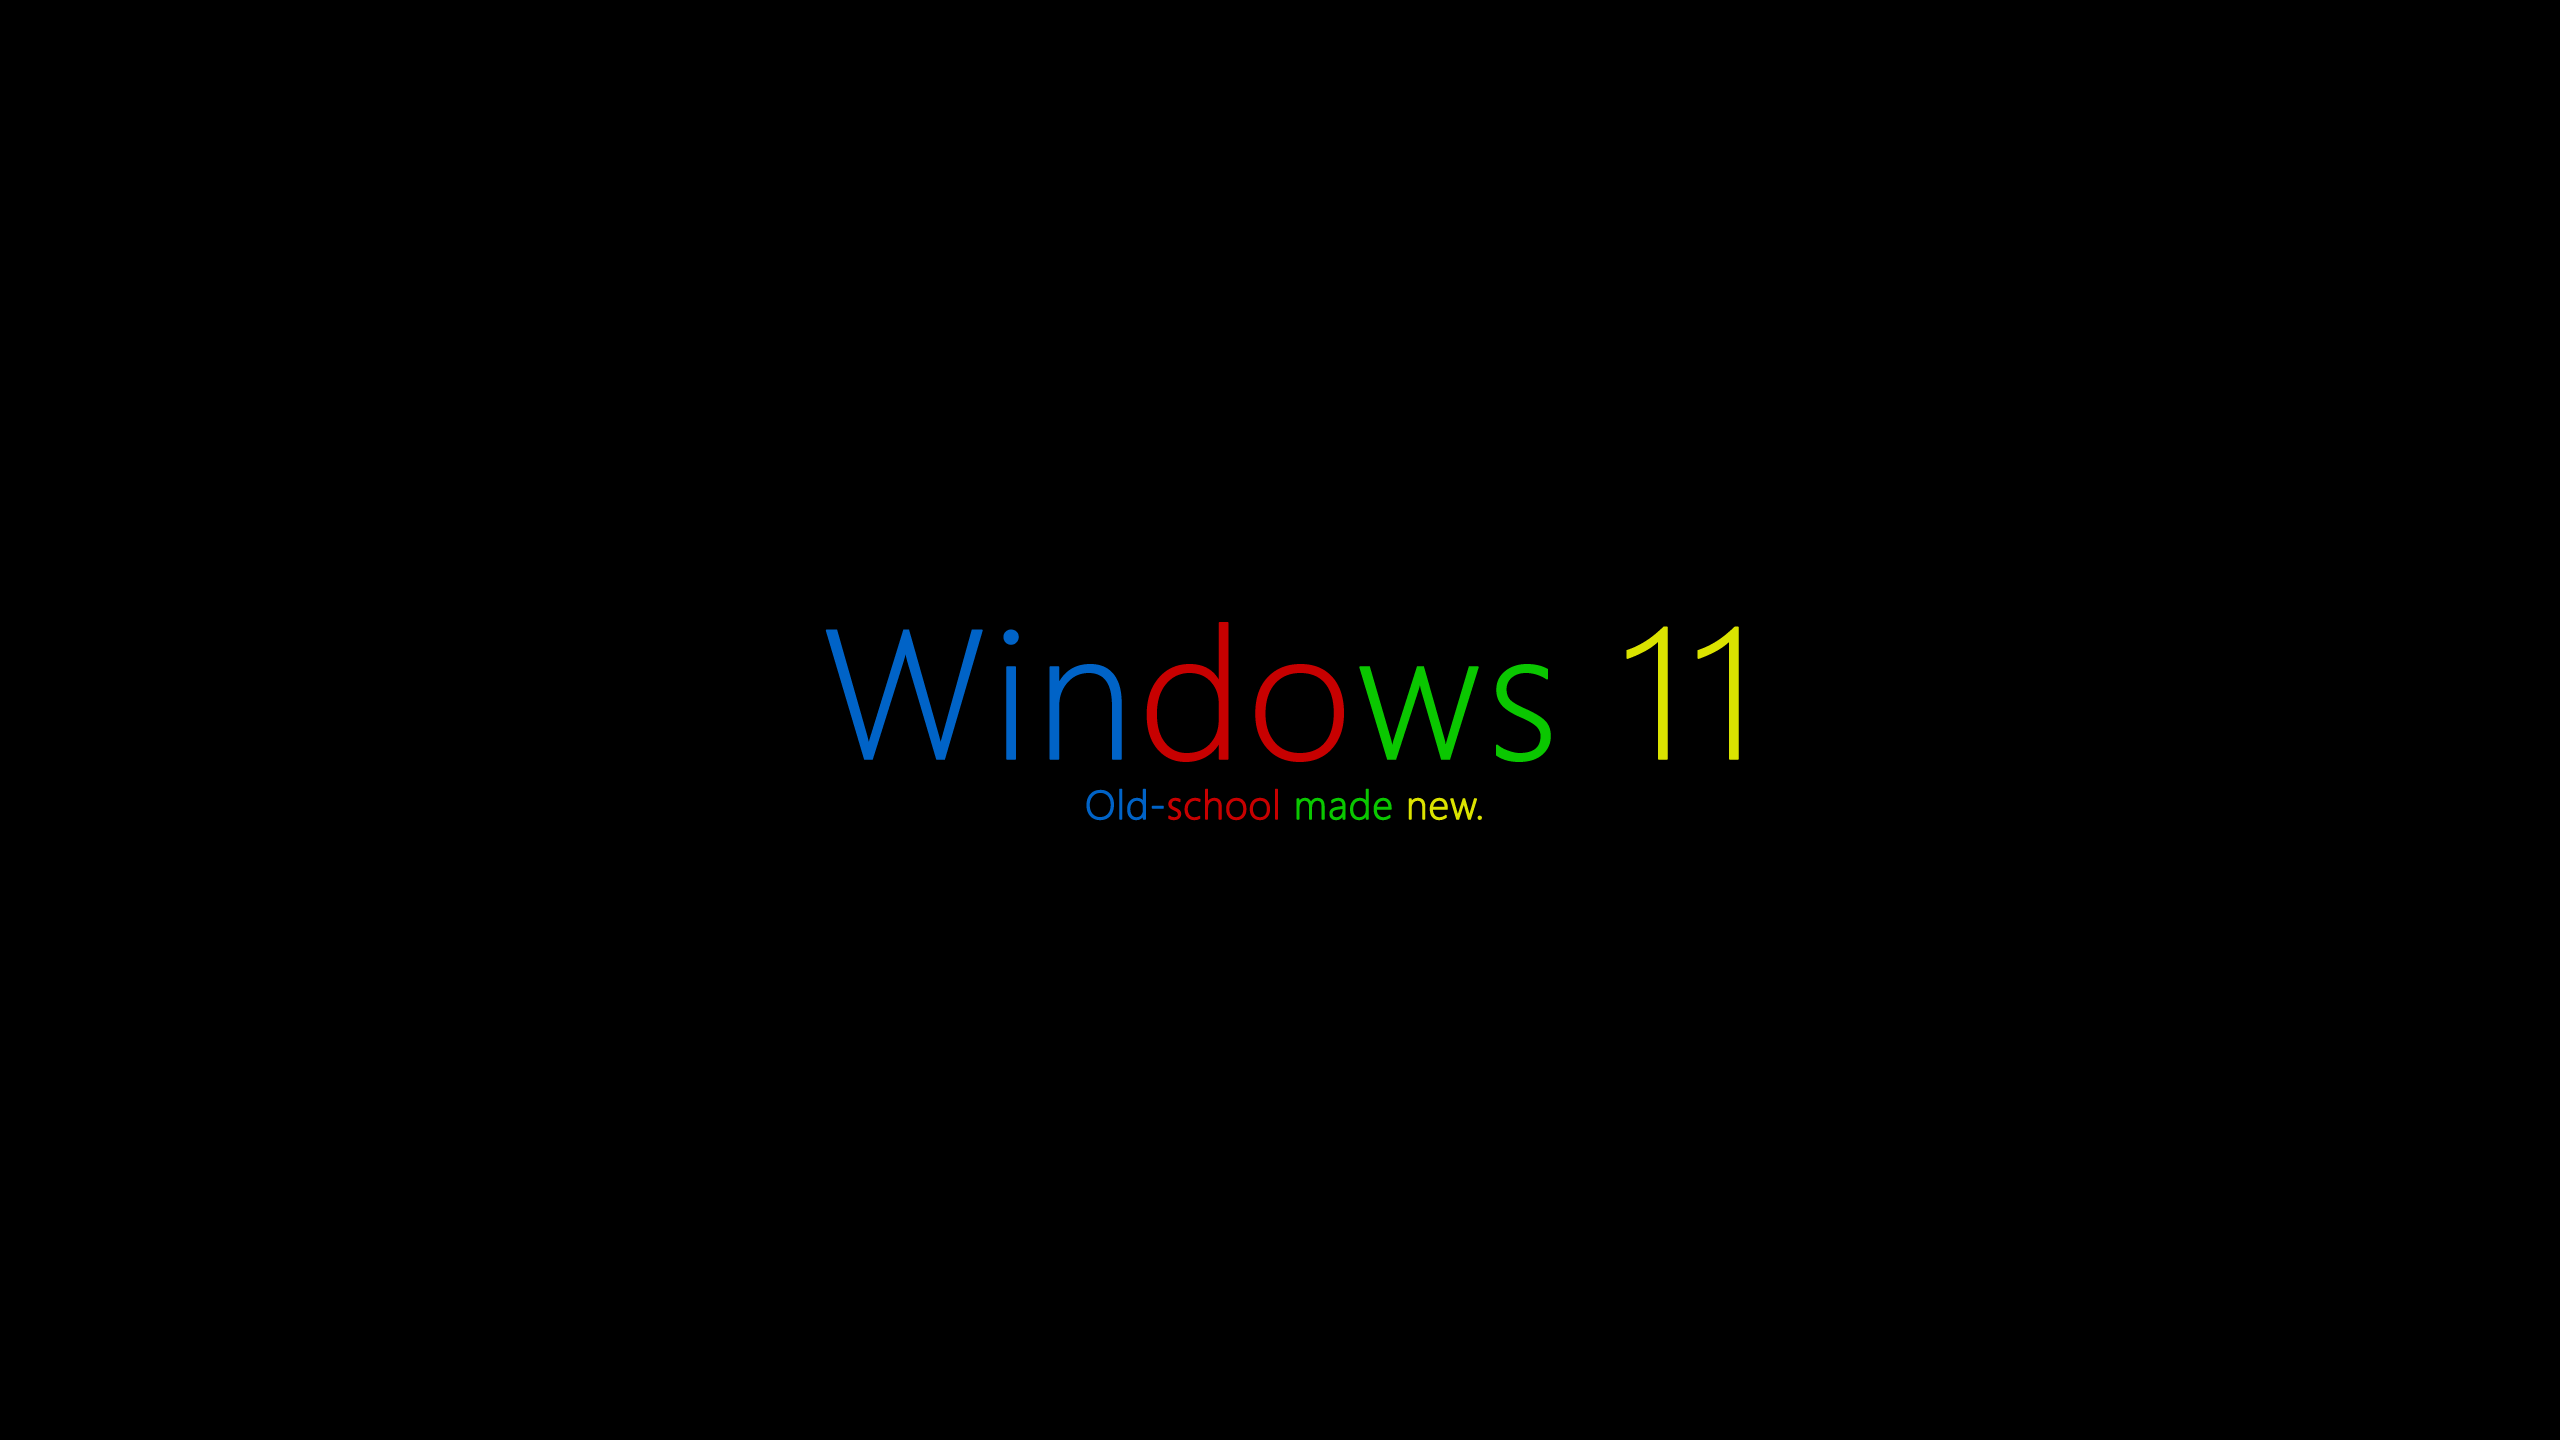 Windows 11 Wallpaper 2020